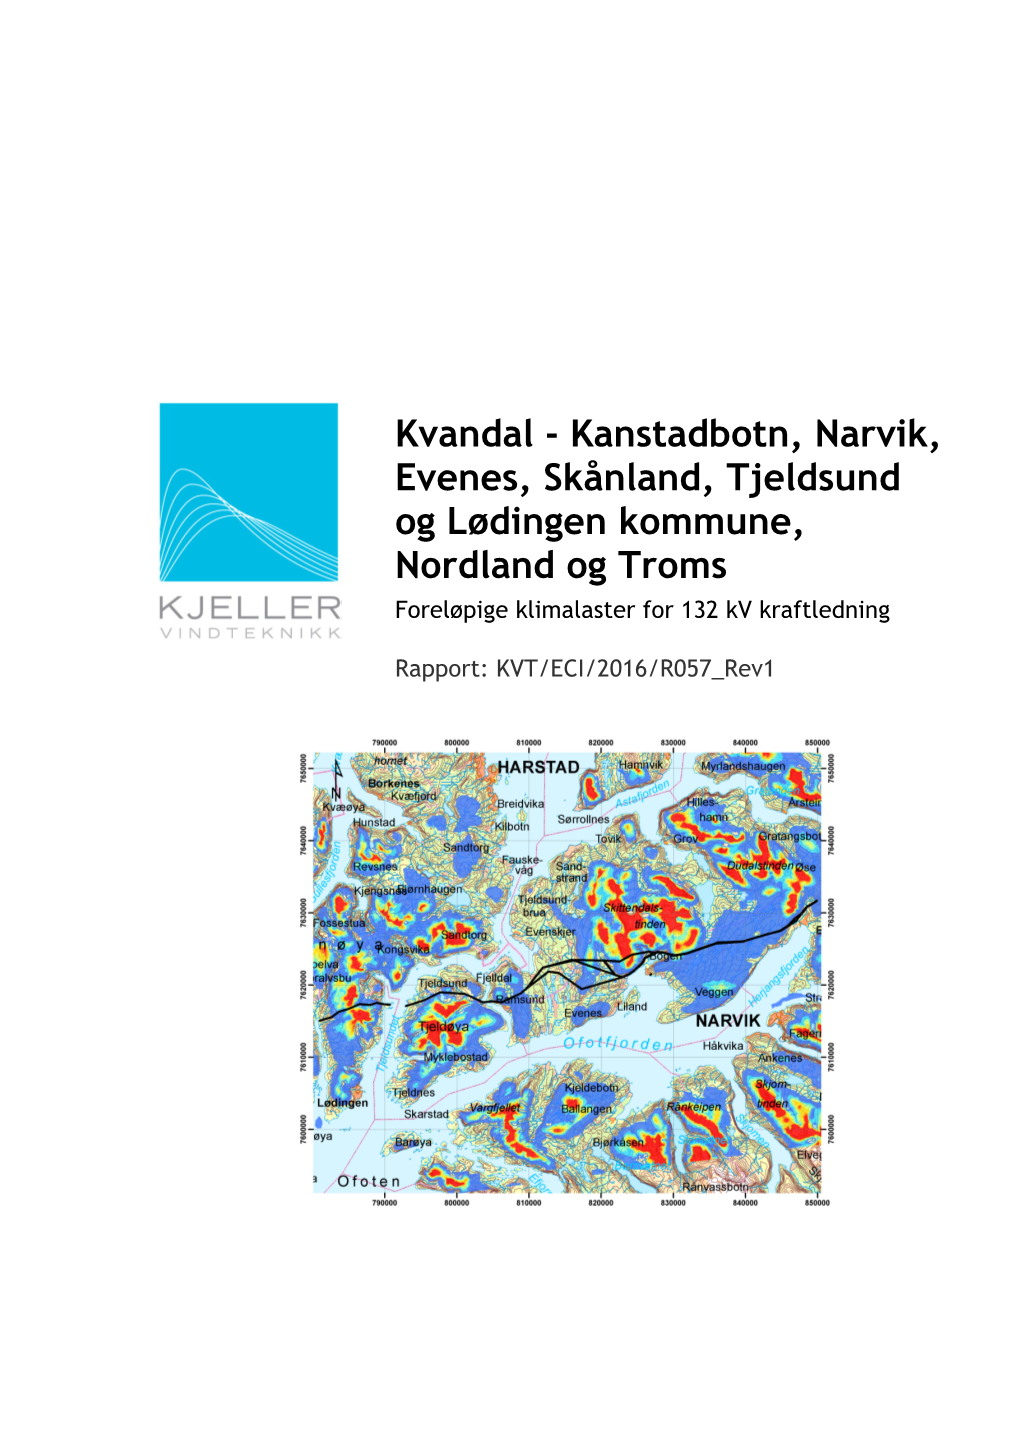 Kvandal - Kanstadbotn, Narvik, Evenes, Skånland, Tjeldsund Og Lødingen Kommune, Nordland Og Troms Foreløpige Klimalaster for 132 Kv Kraftledning